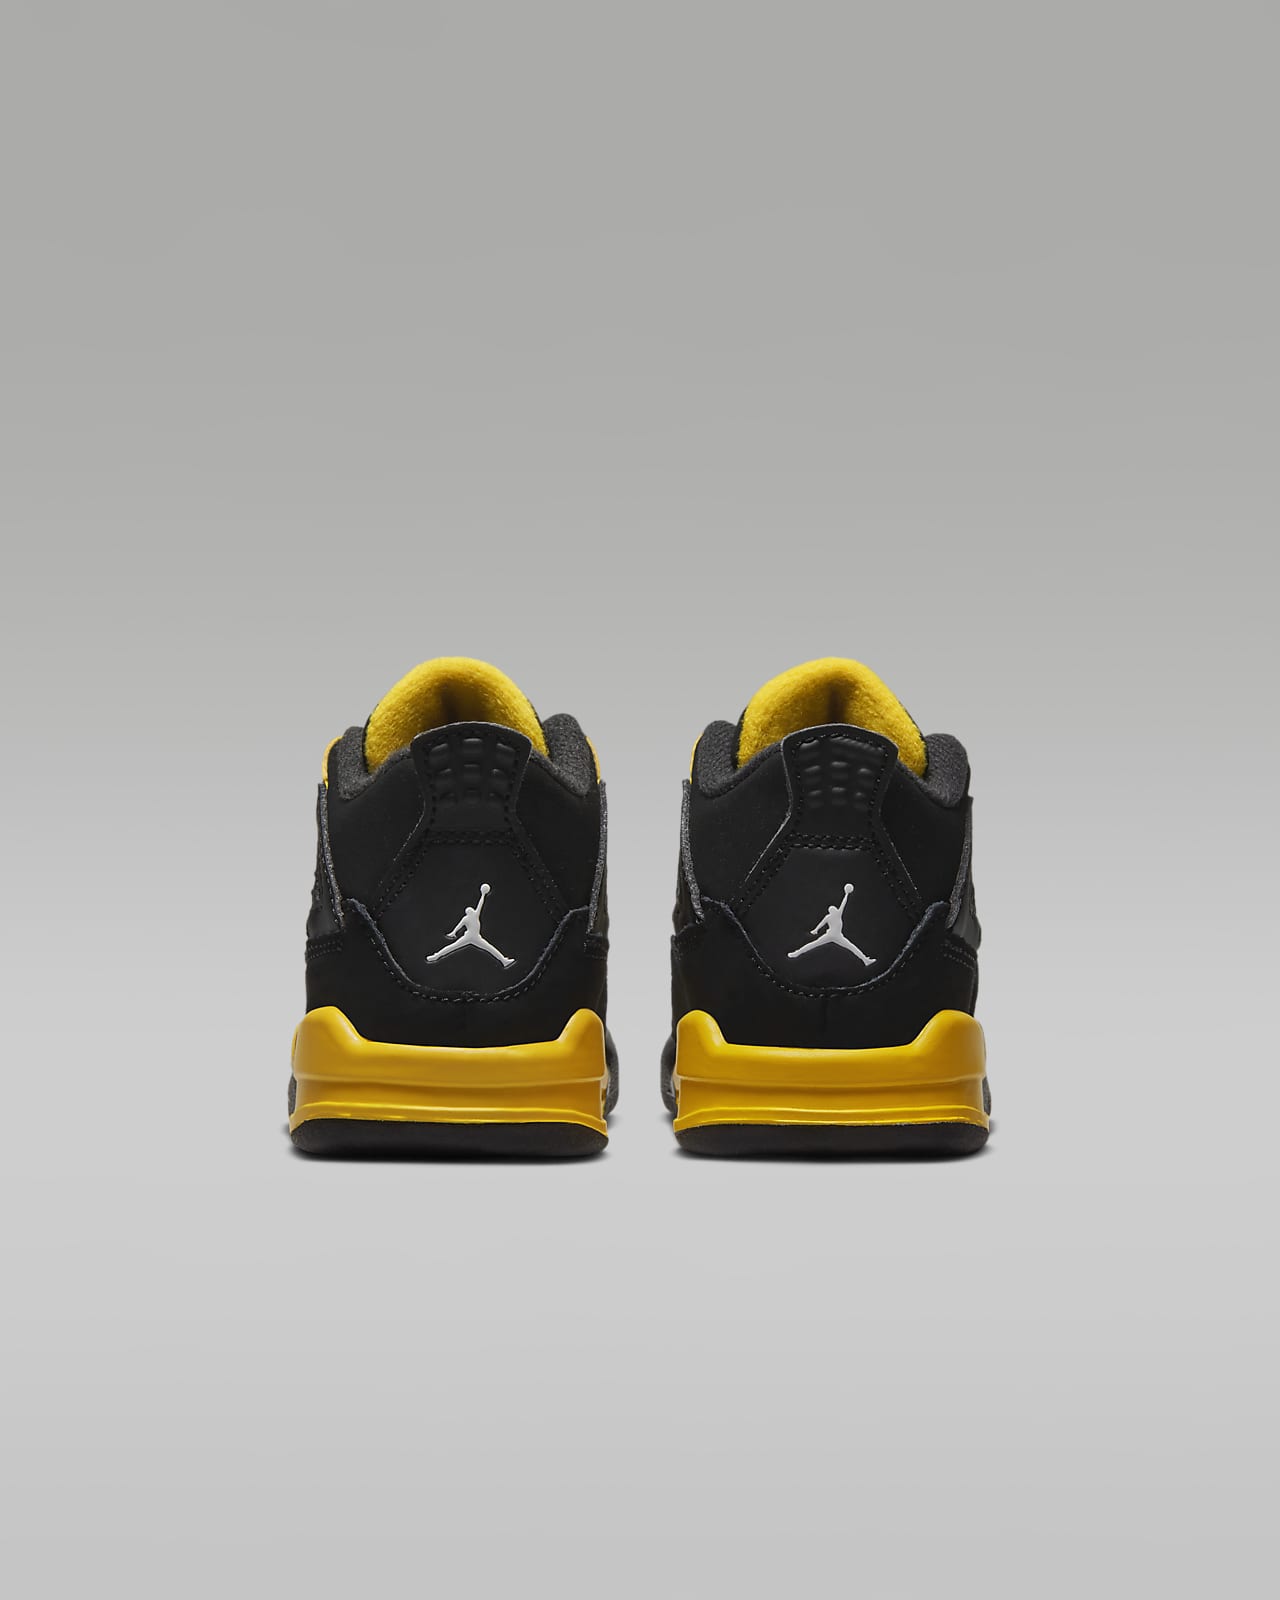 Calzado para niños grandes Air Jordan 4 Retro. Nike MX